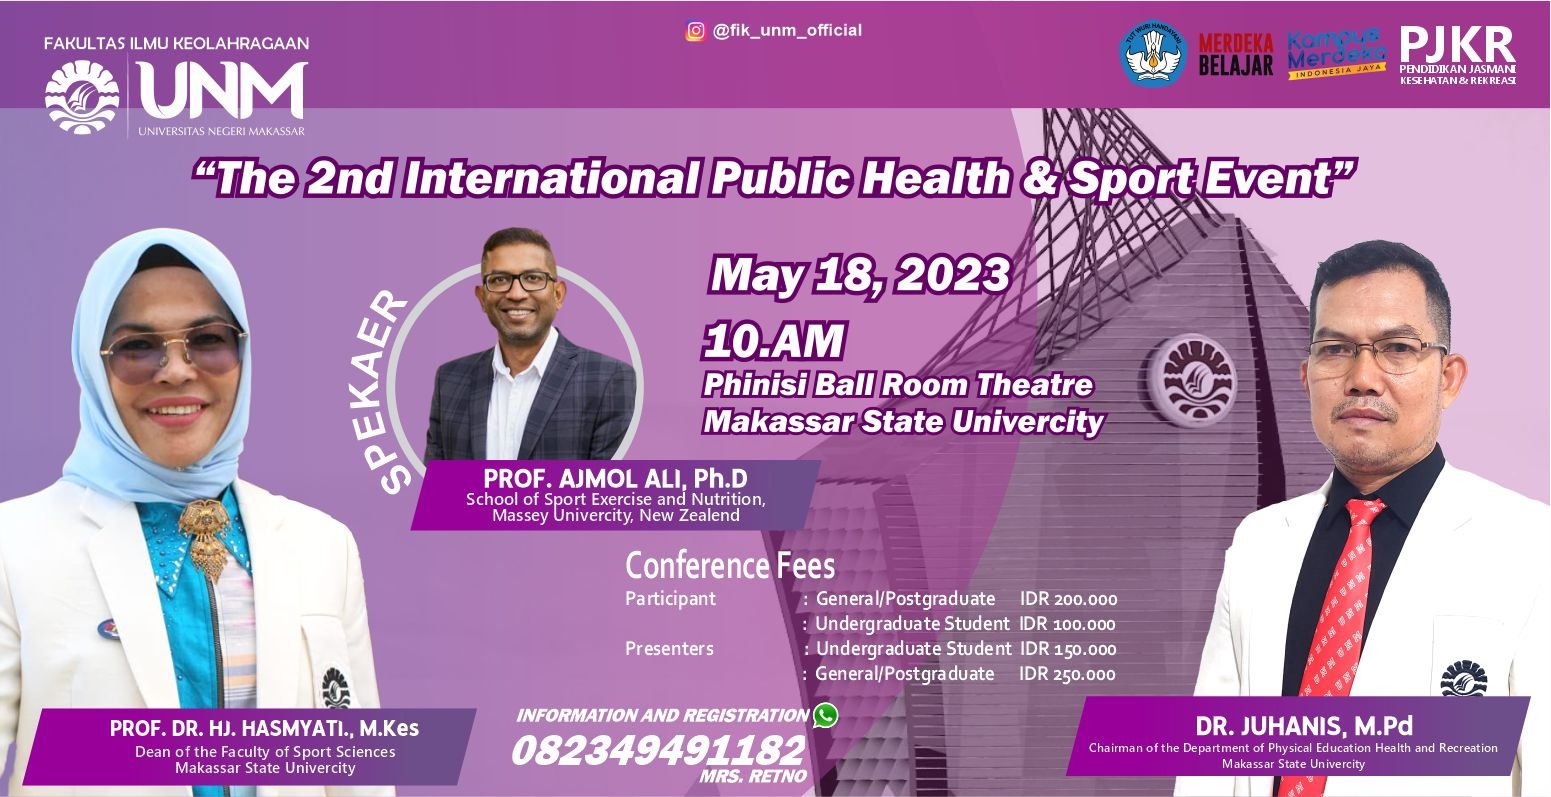 The 2nd International Public Health & Sport Event